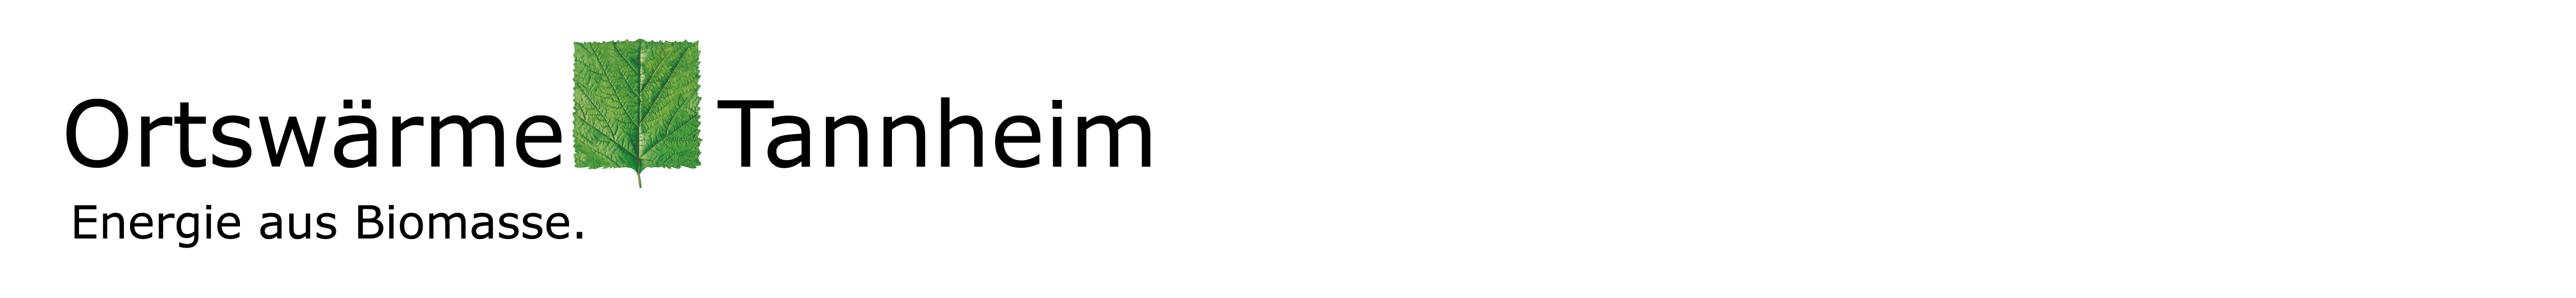 Ortswärme Tannheim Logo